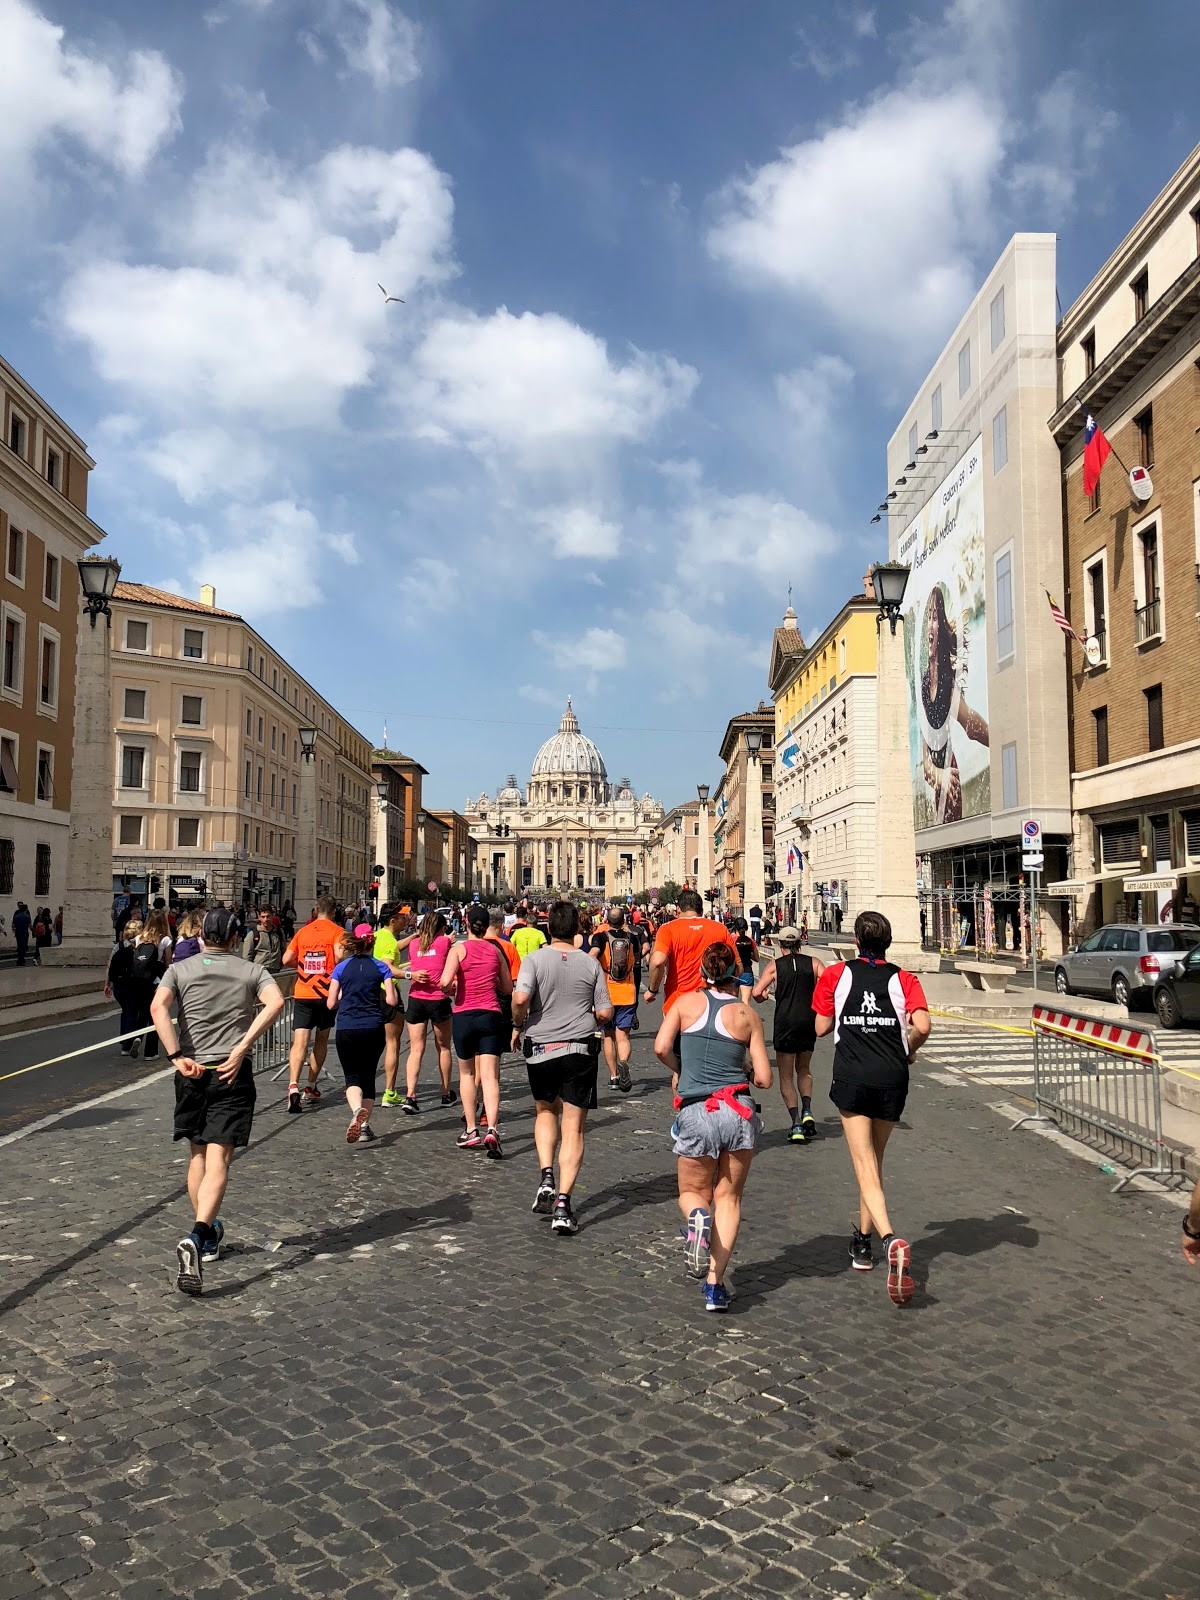 [Хабра-оффтоп] Maratona di Roma, или первый марафон для ИТ-шника - 4